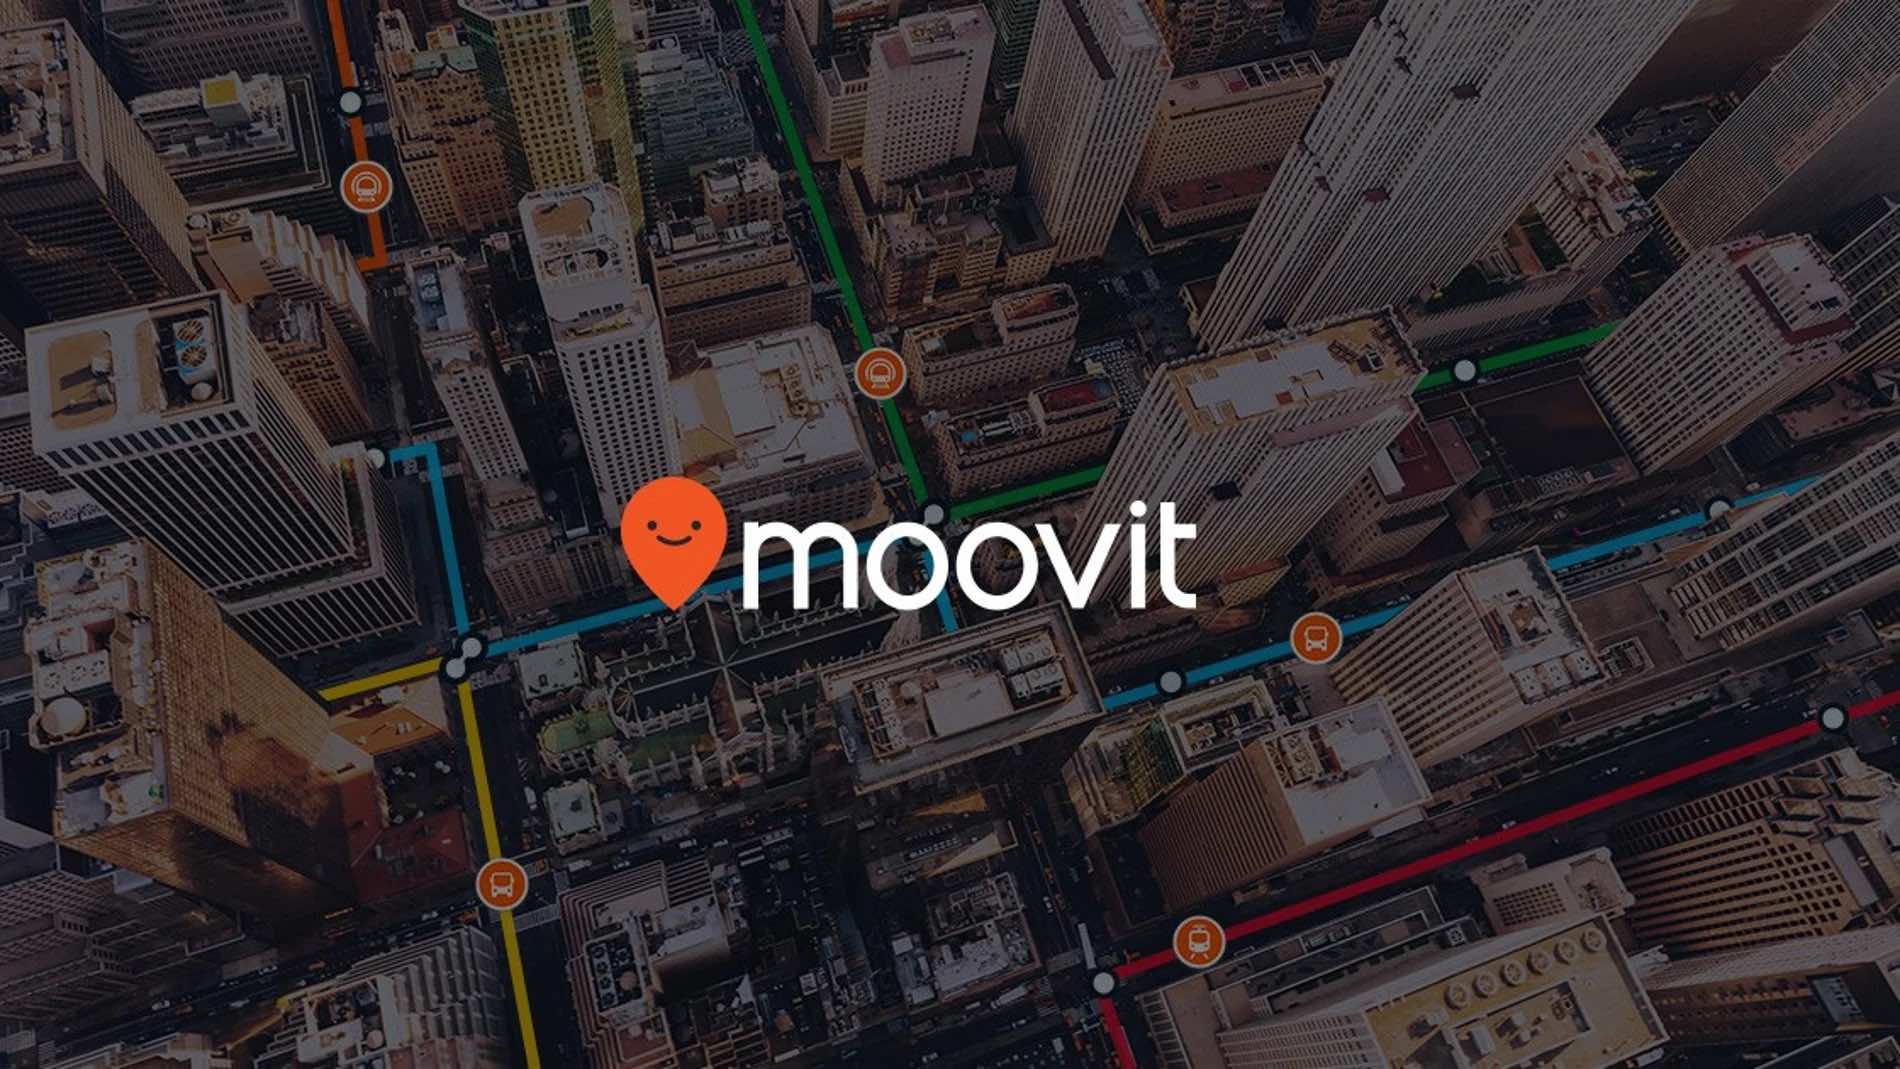 Moovit logo over a city